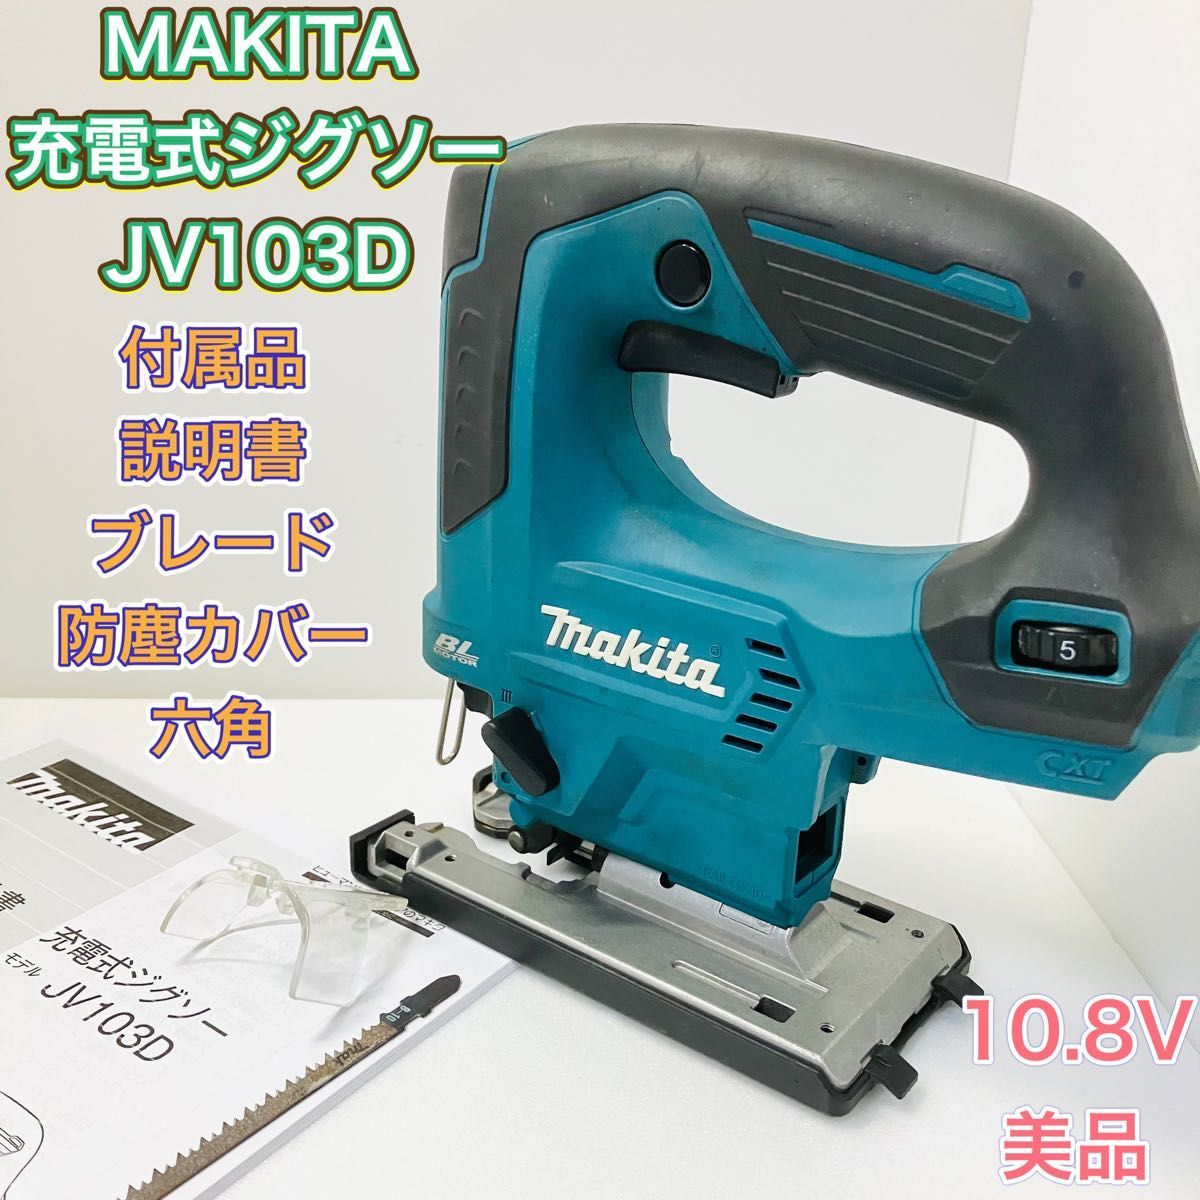 MAKITA マキタ JV103D ジグソー 充電式 10.8V 電動工具 切断機 DIY 業務用